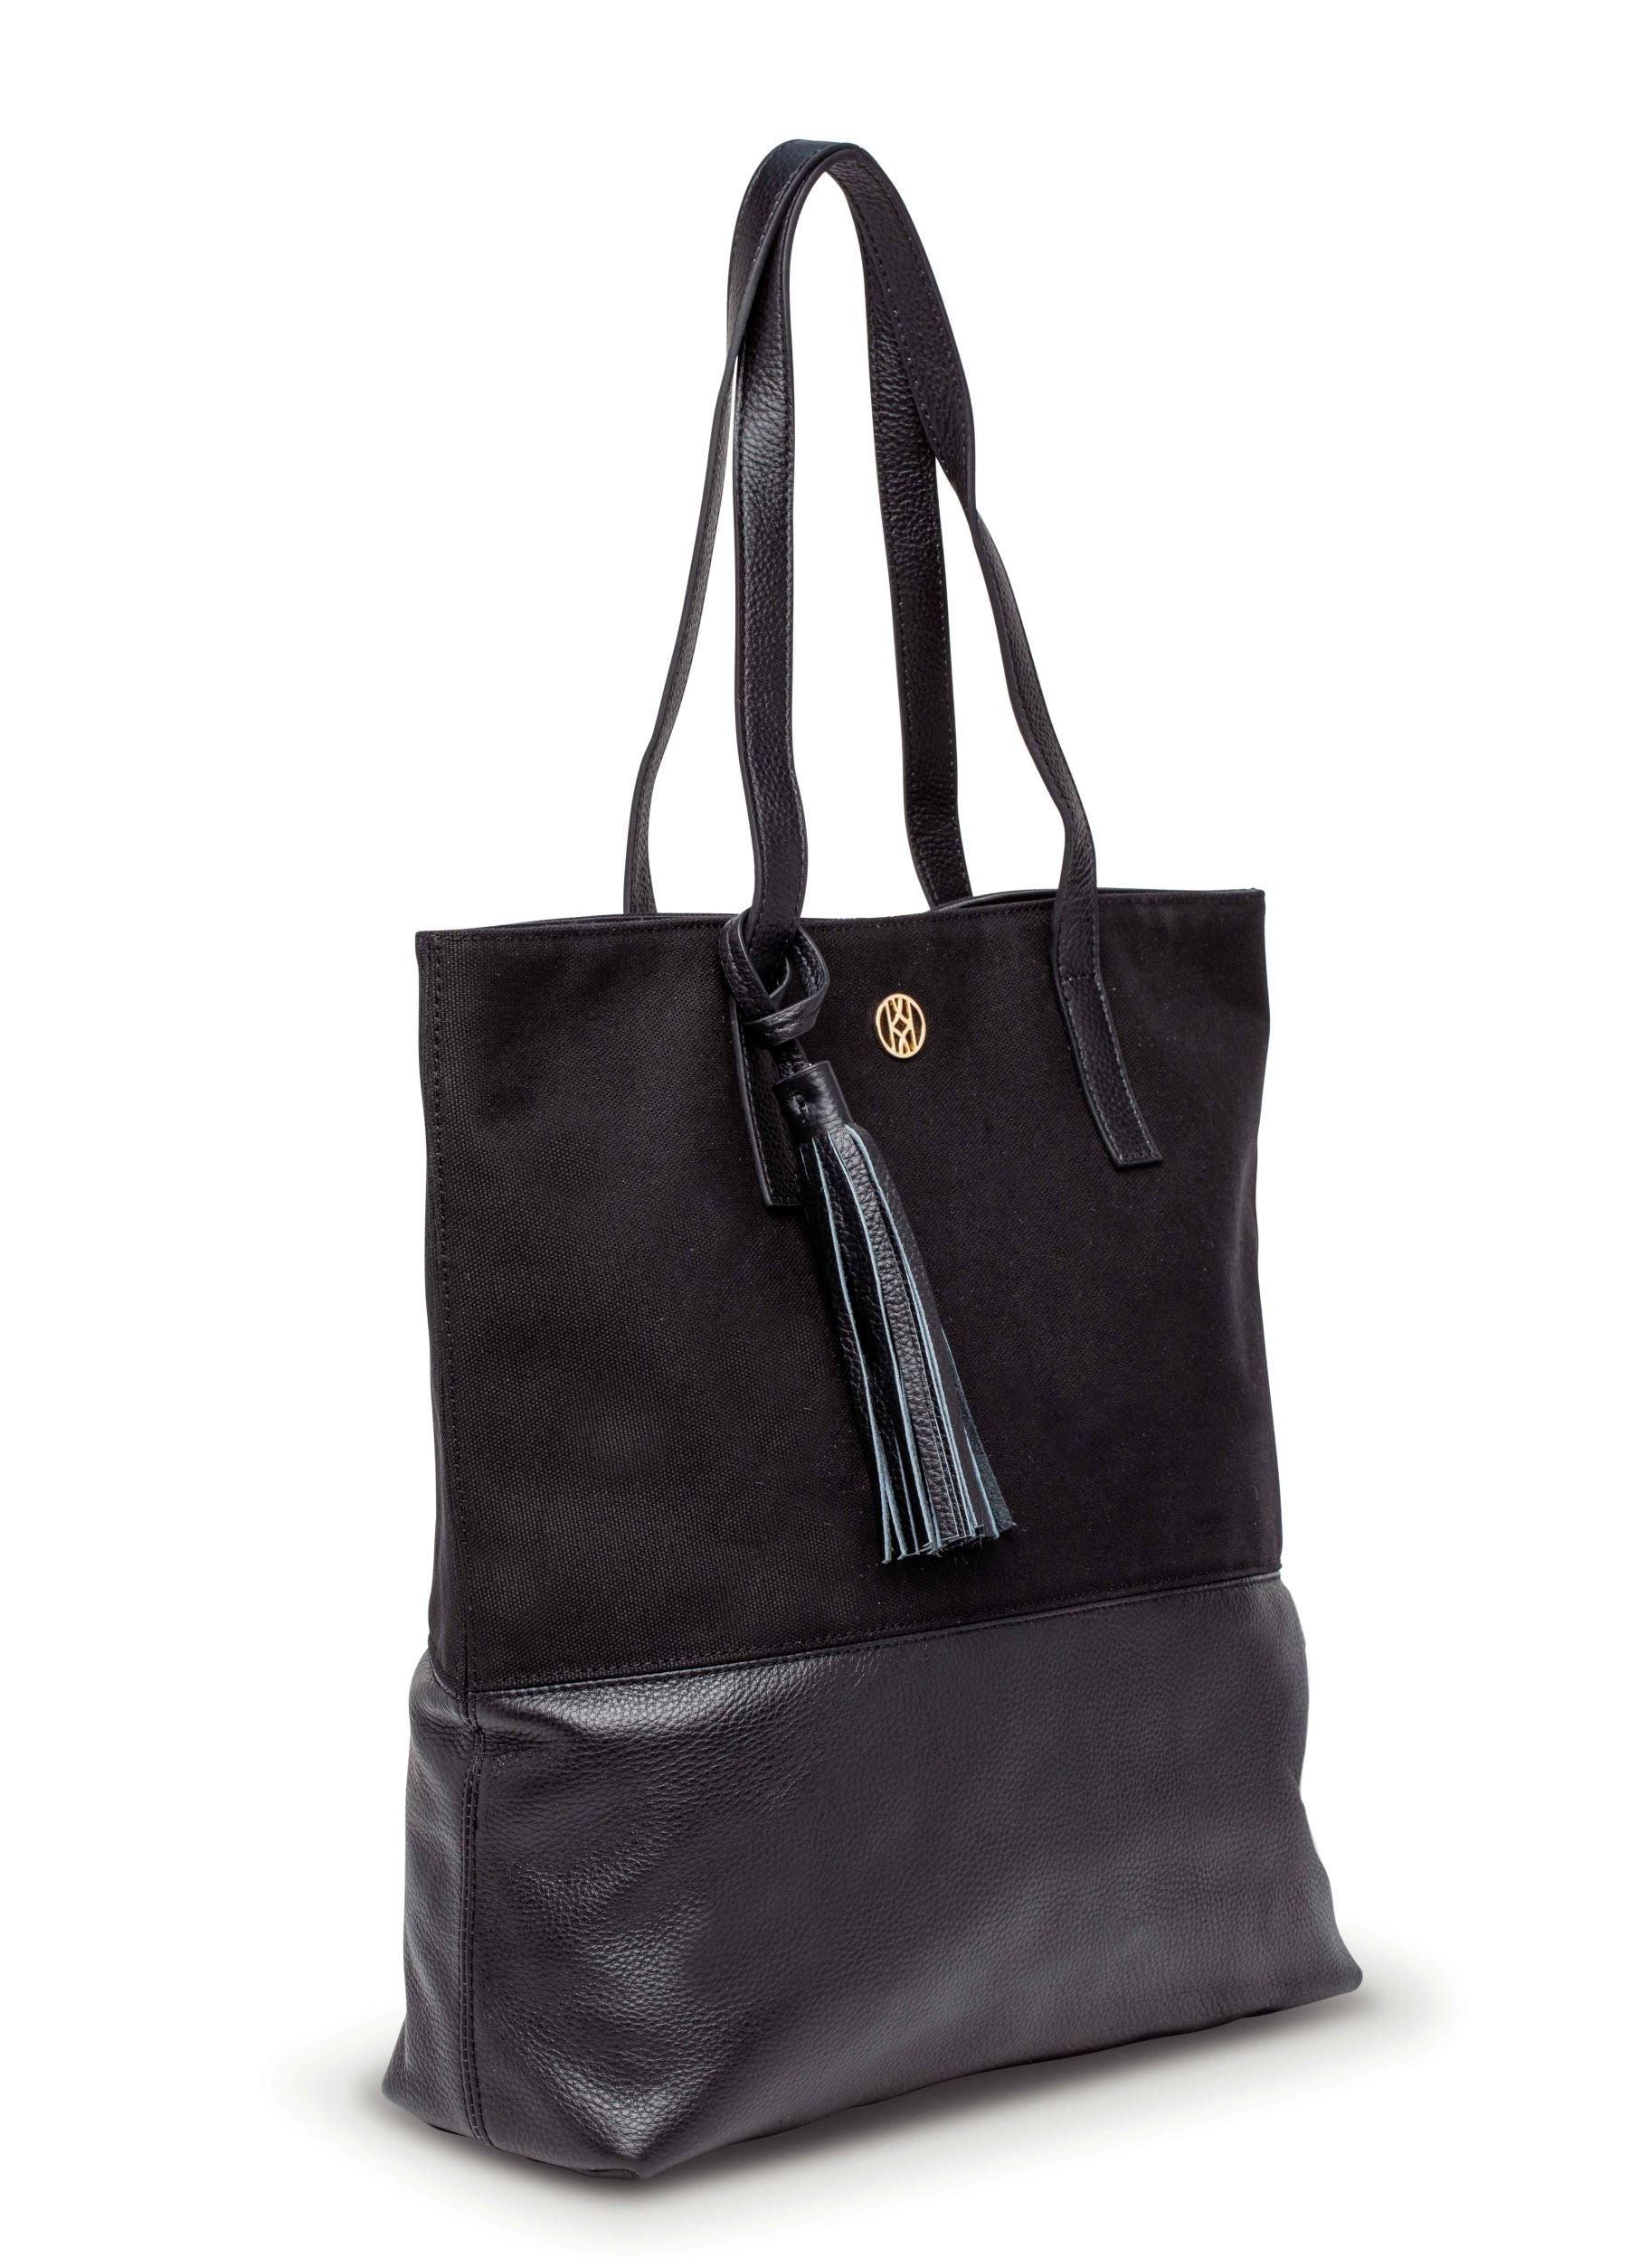 Canvas Shopper Black Handbag jeanpierreklifa.com   